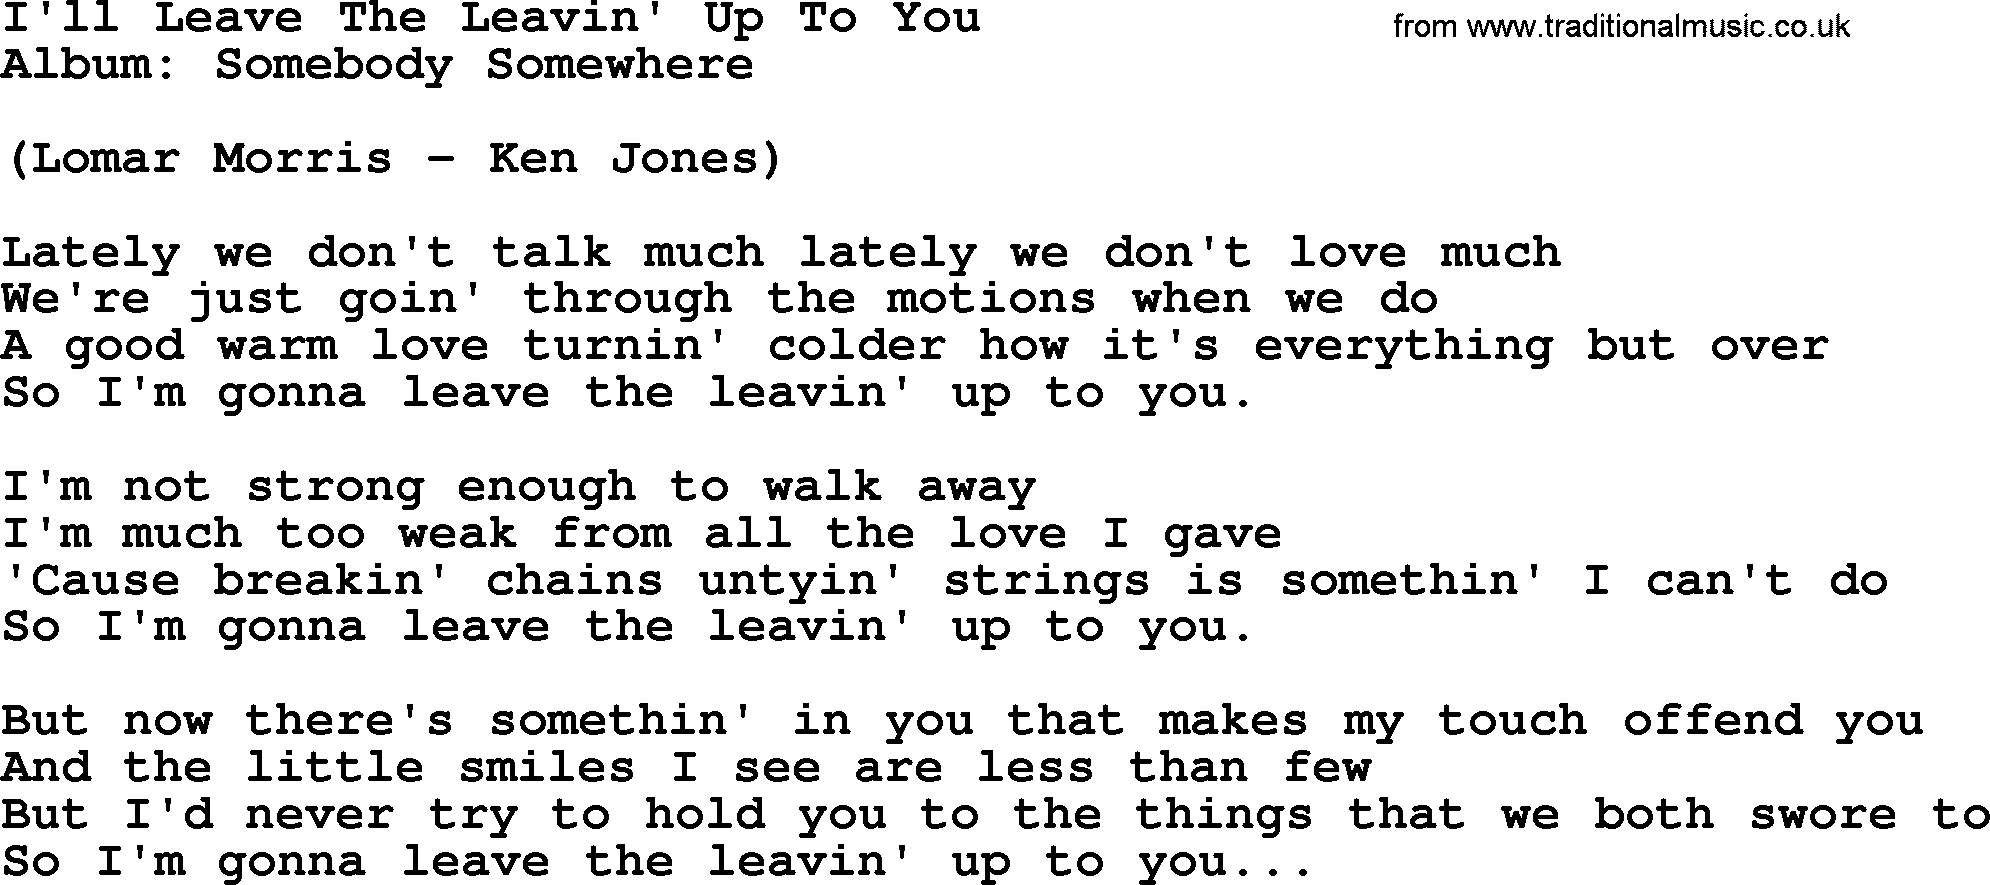 Loretta Lynn song: I'll Leave The Leavin' Up To You lyrics